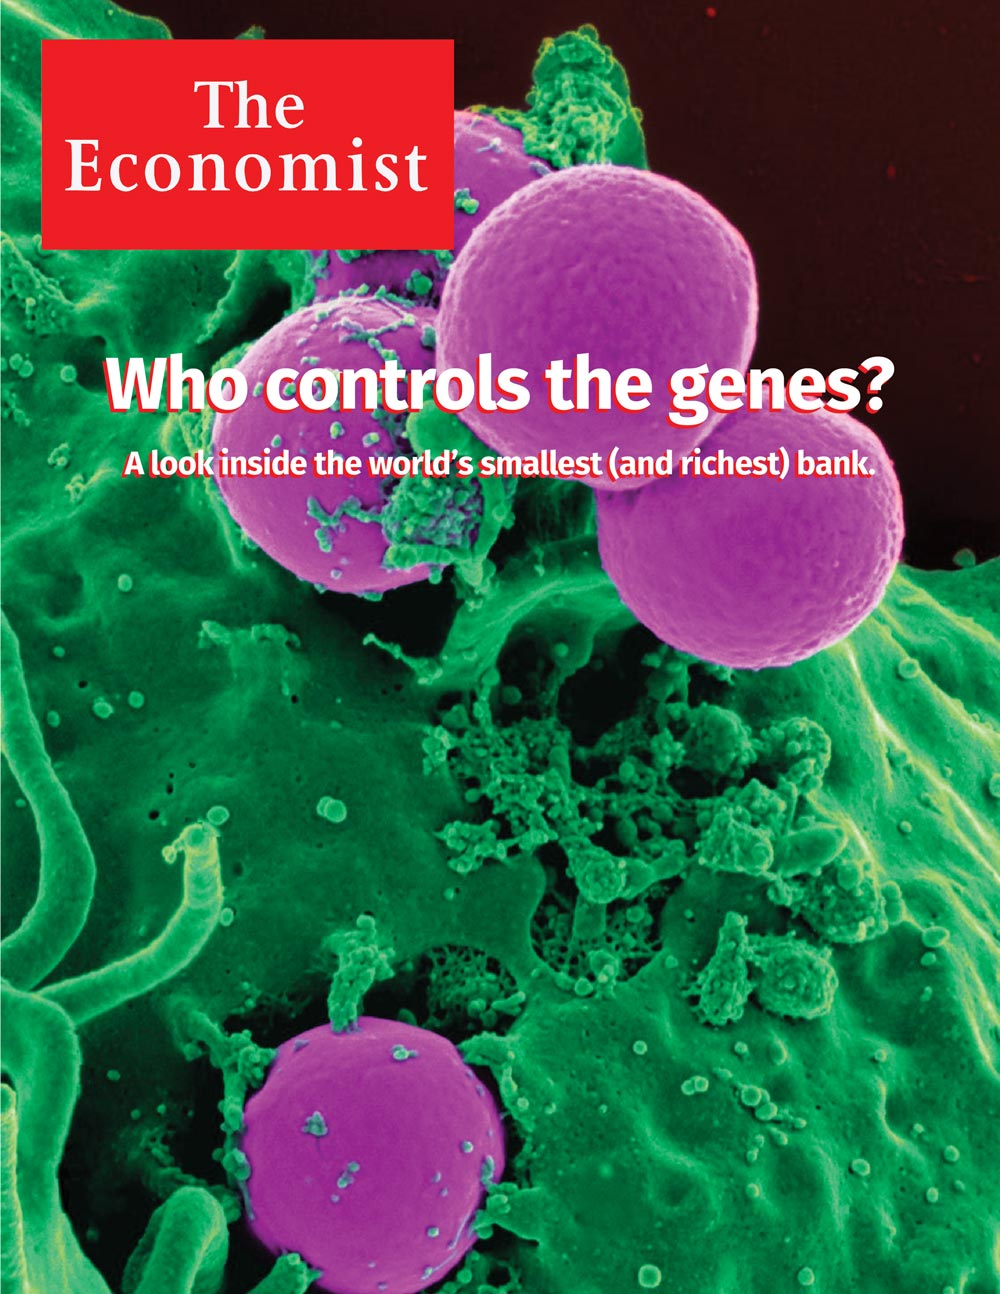 Fictional magazine cover exploring the implications of CRISPR